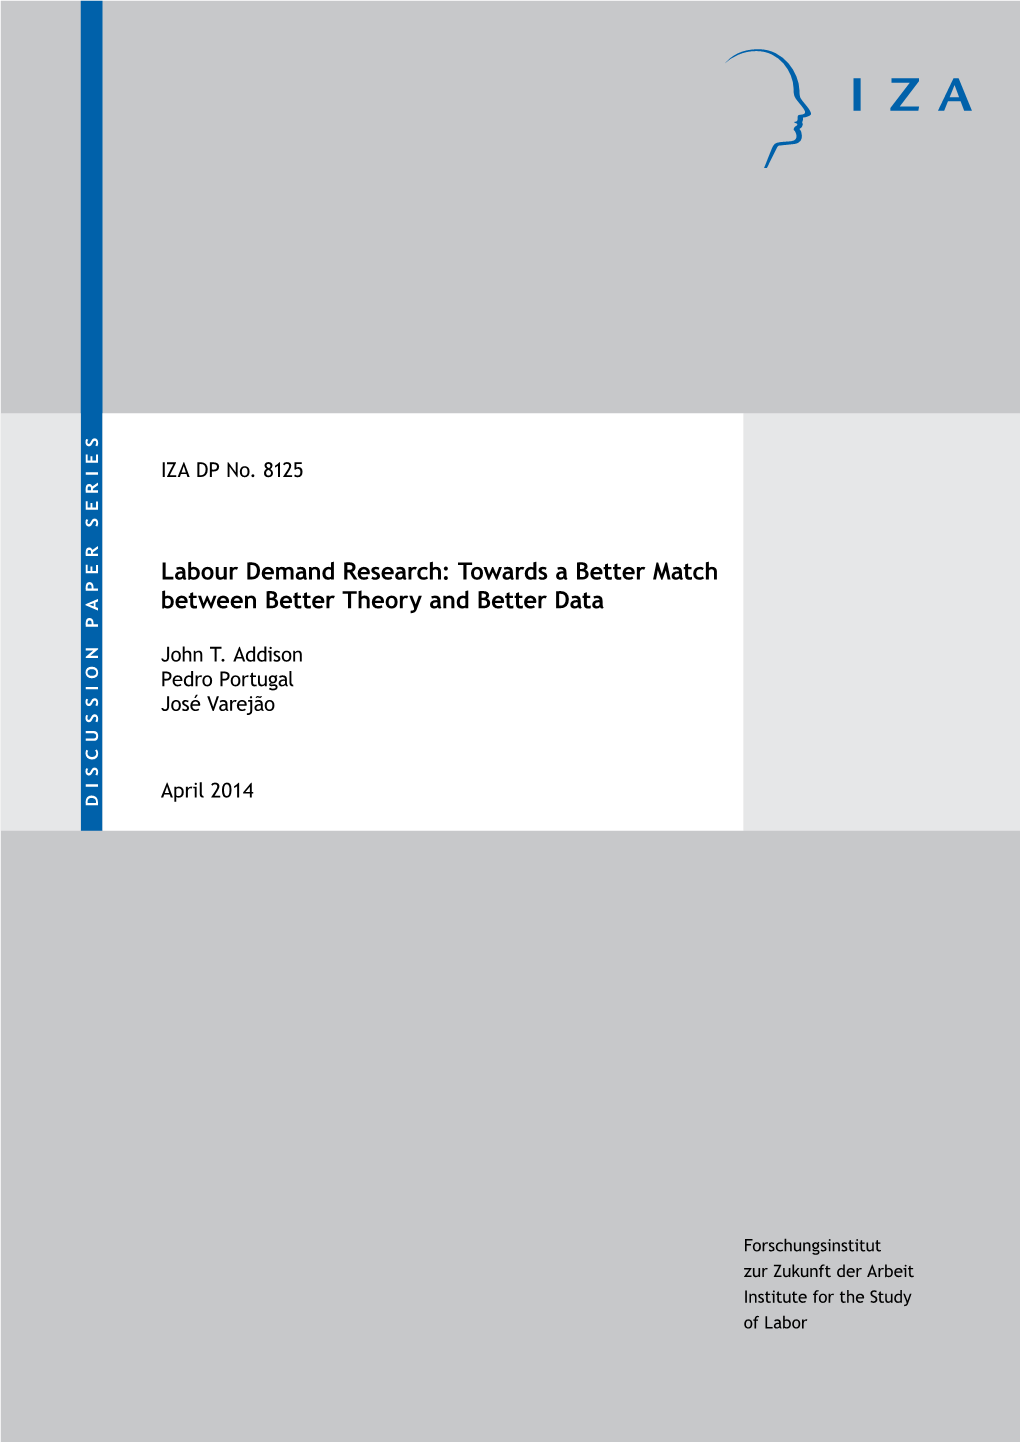 Labour Demand Research: Towards a Better Match Between Better Theory and Better Data